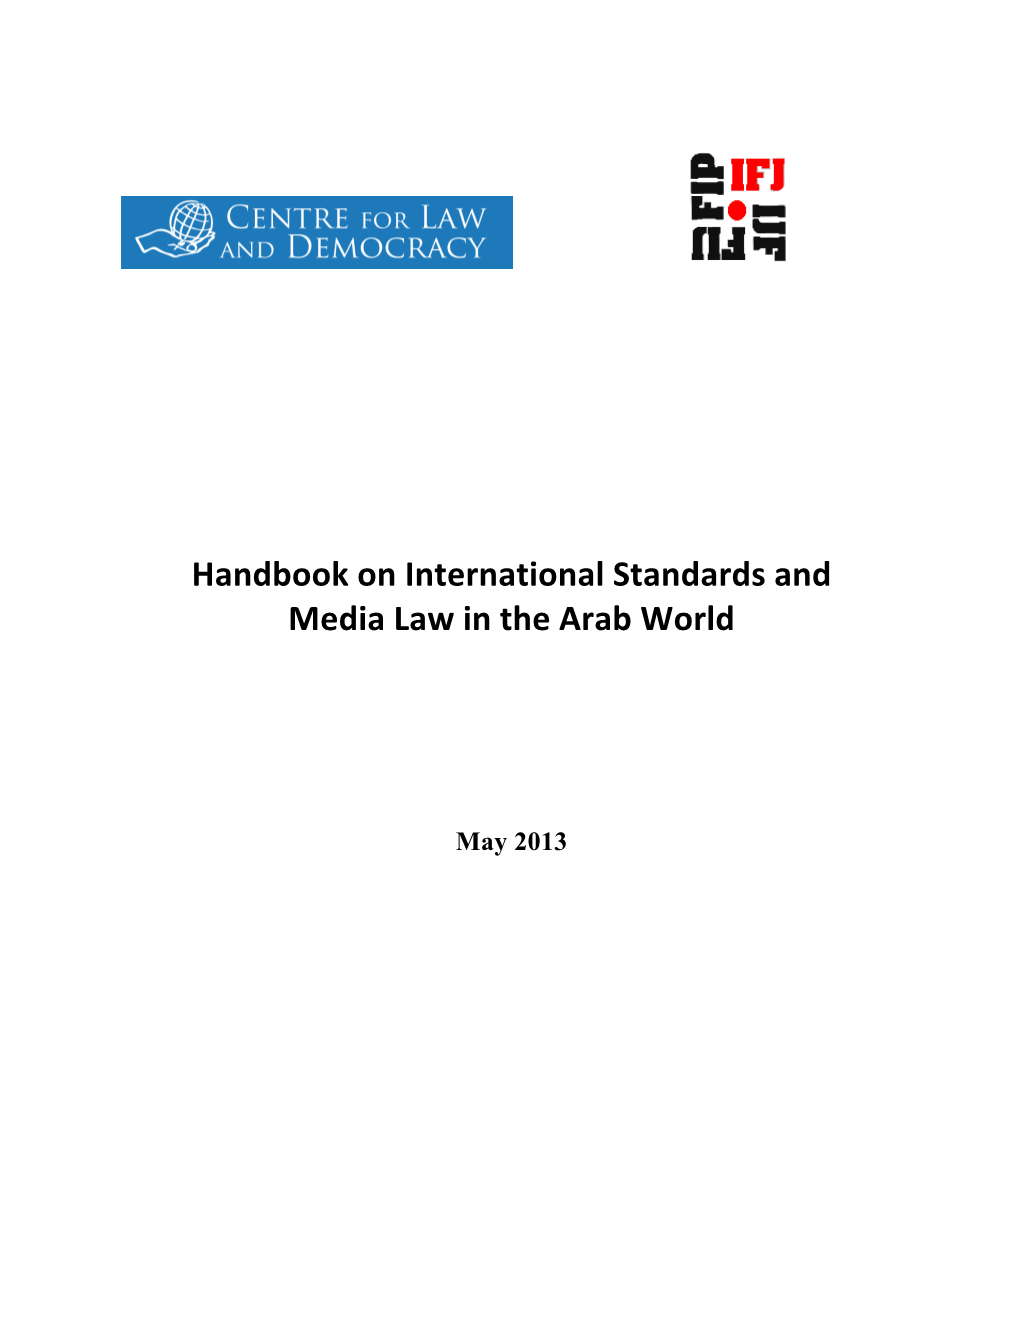 Handbook on International Standards and Media Law in the Arab World